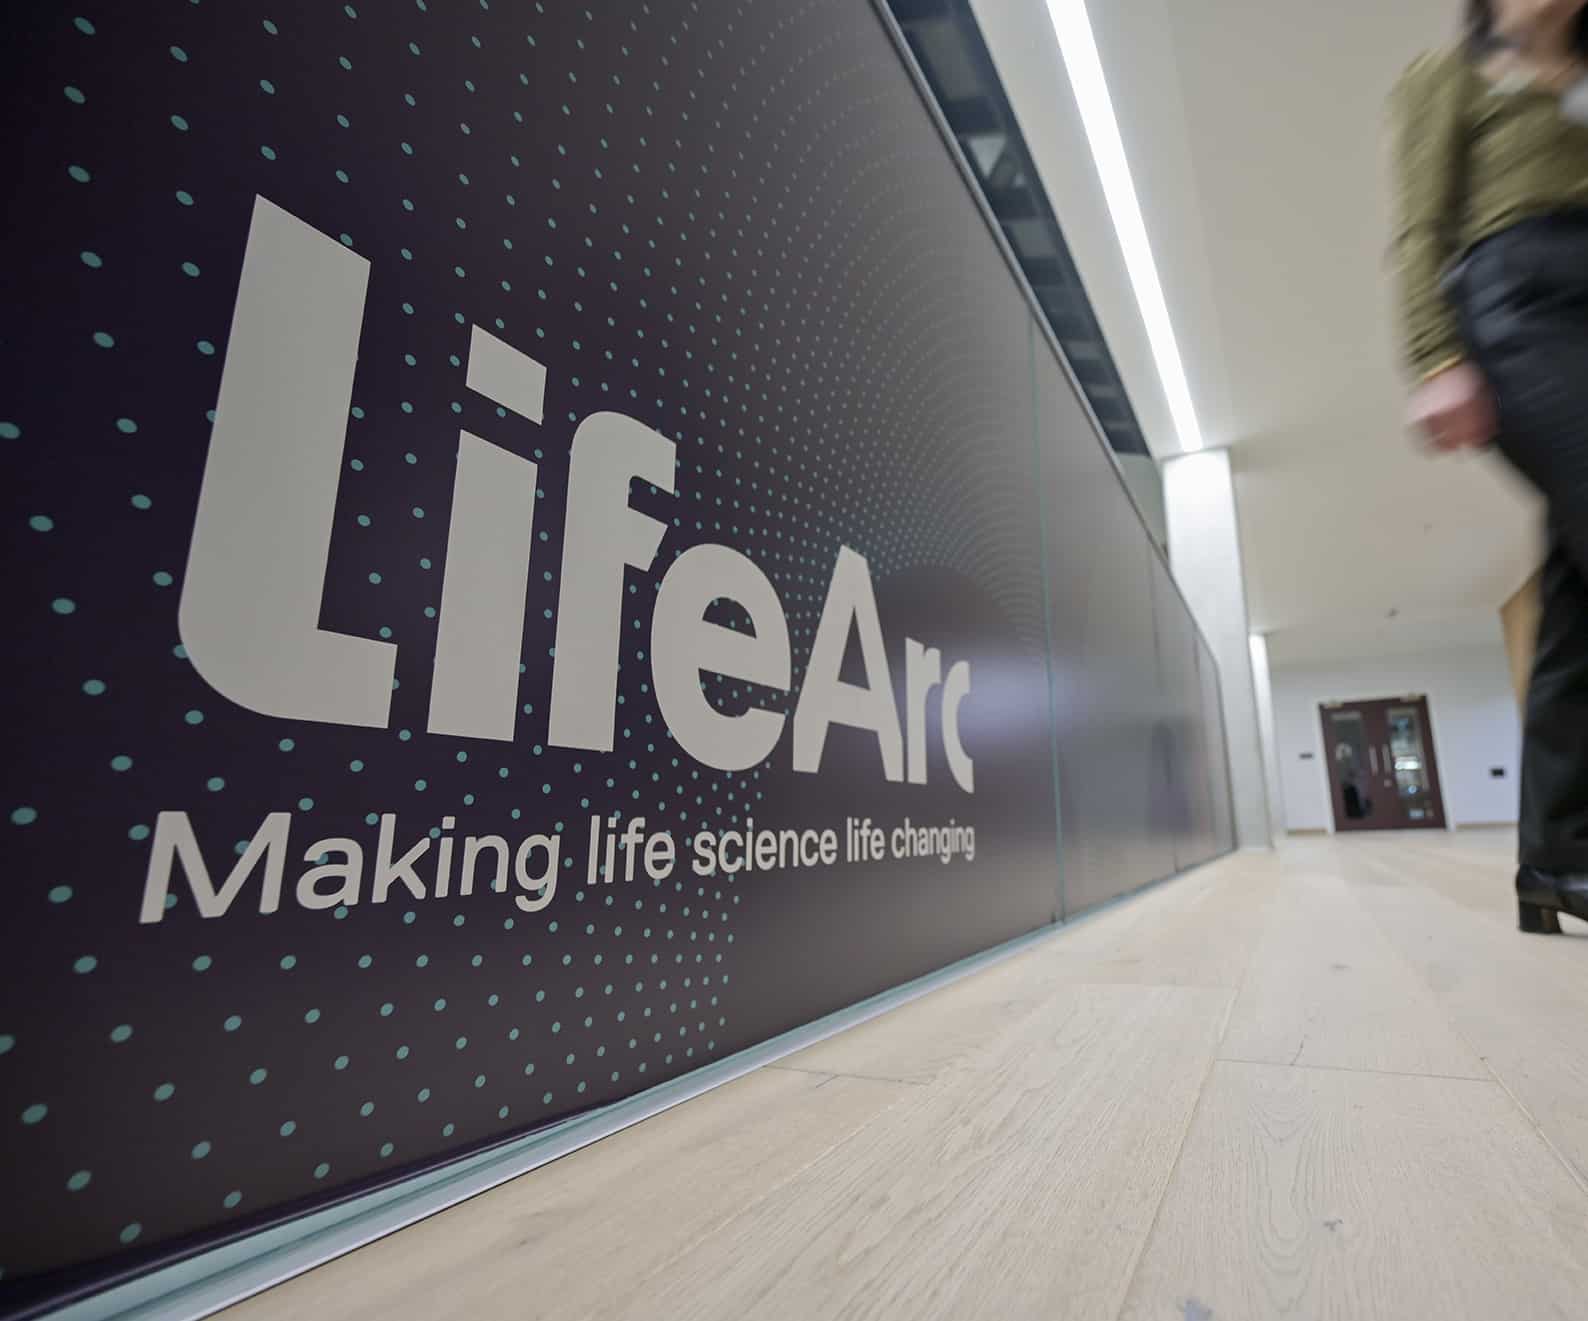 LifeArc sign on the reception desk in Edinburgh